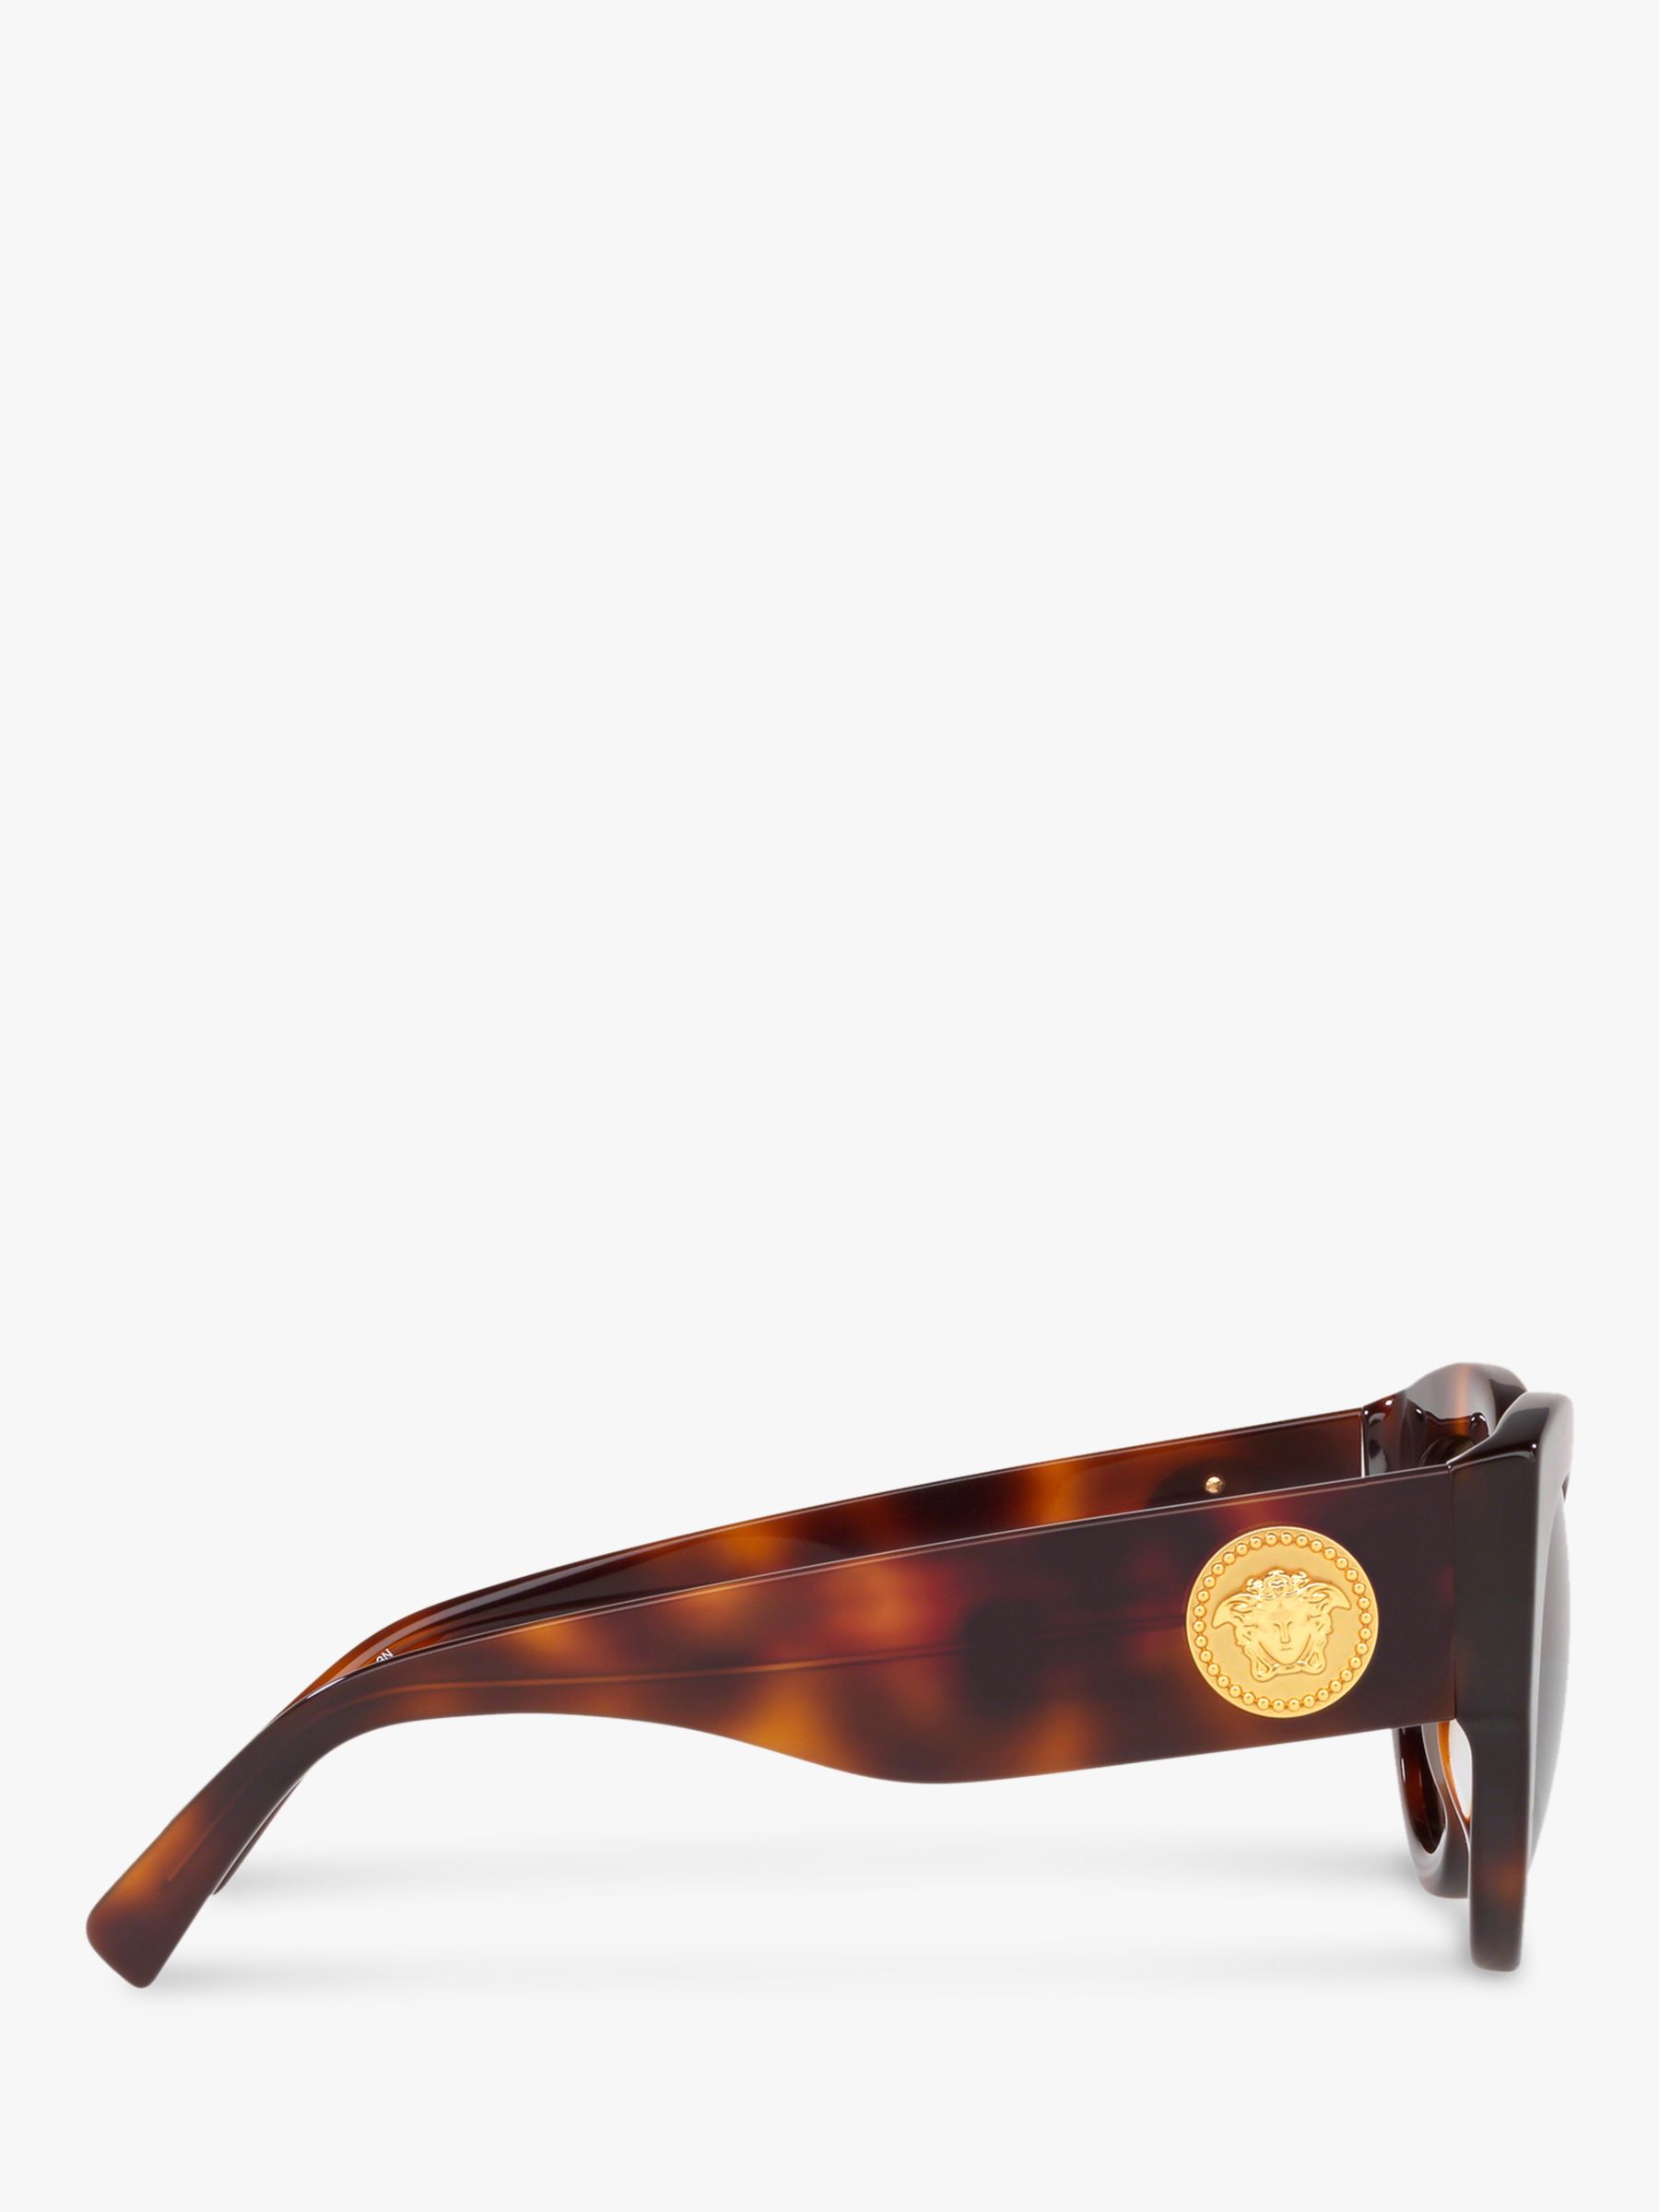 Versace VE4353 Women's Cat's Eye Sunglasses, Havana/Brown at John Lewis ...